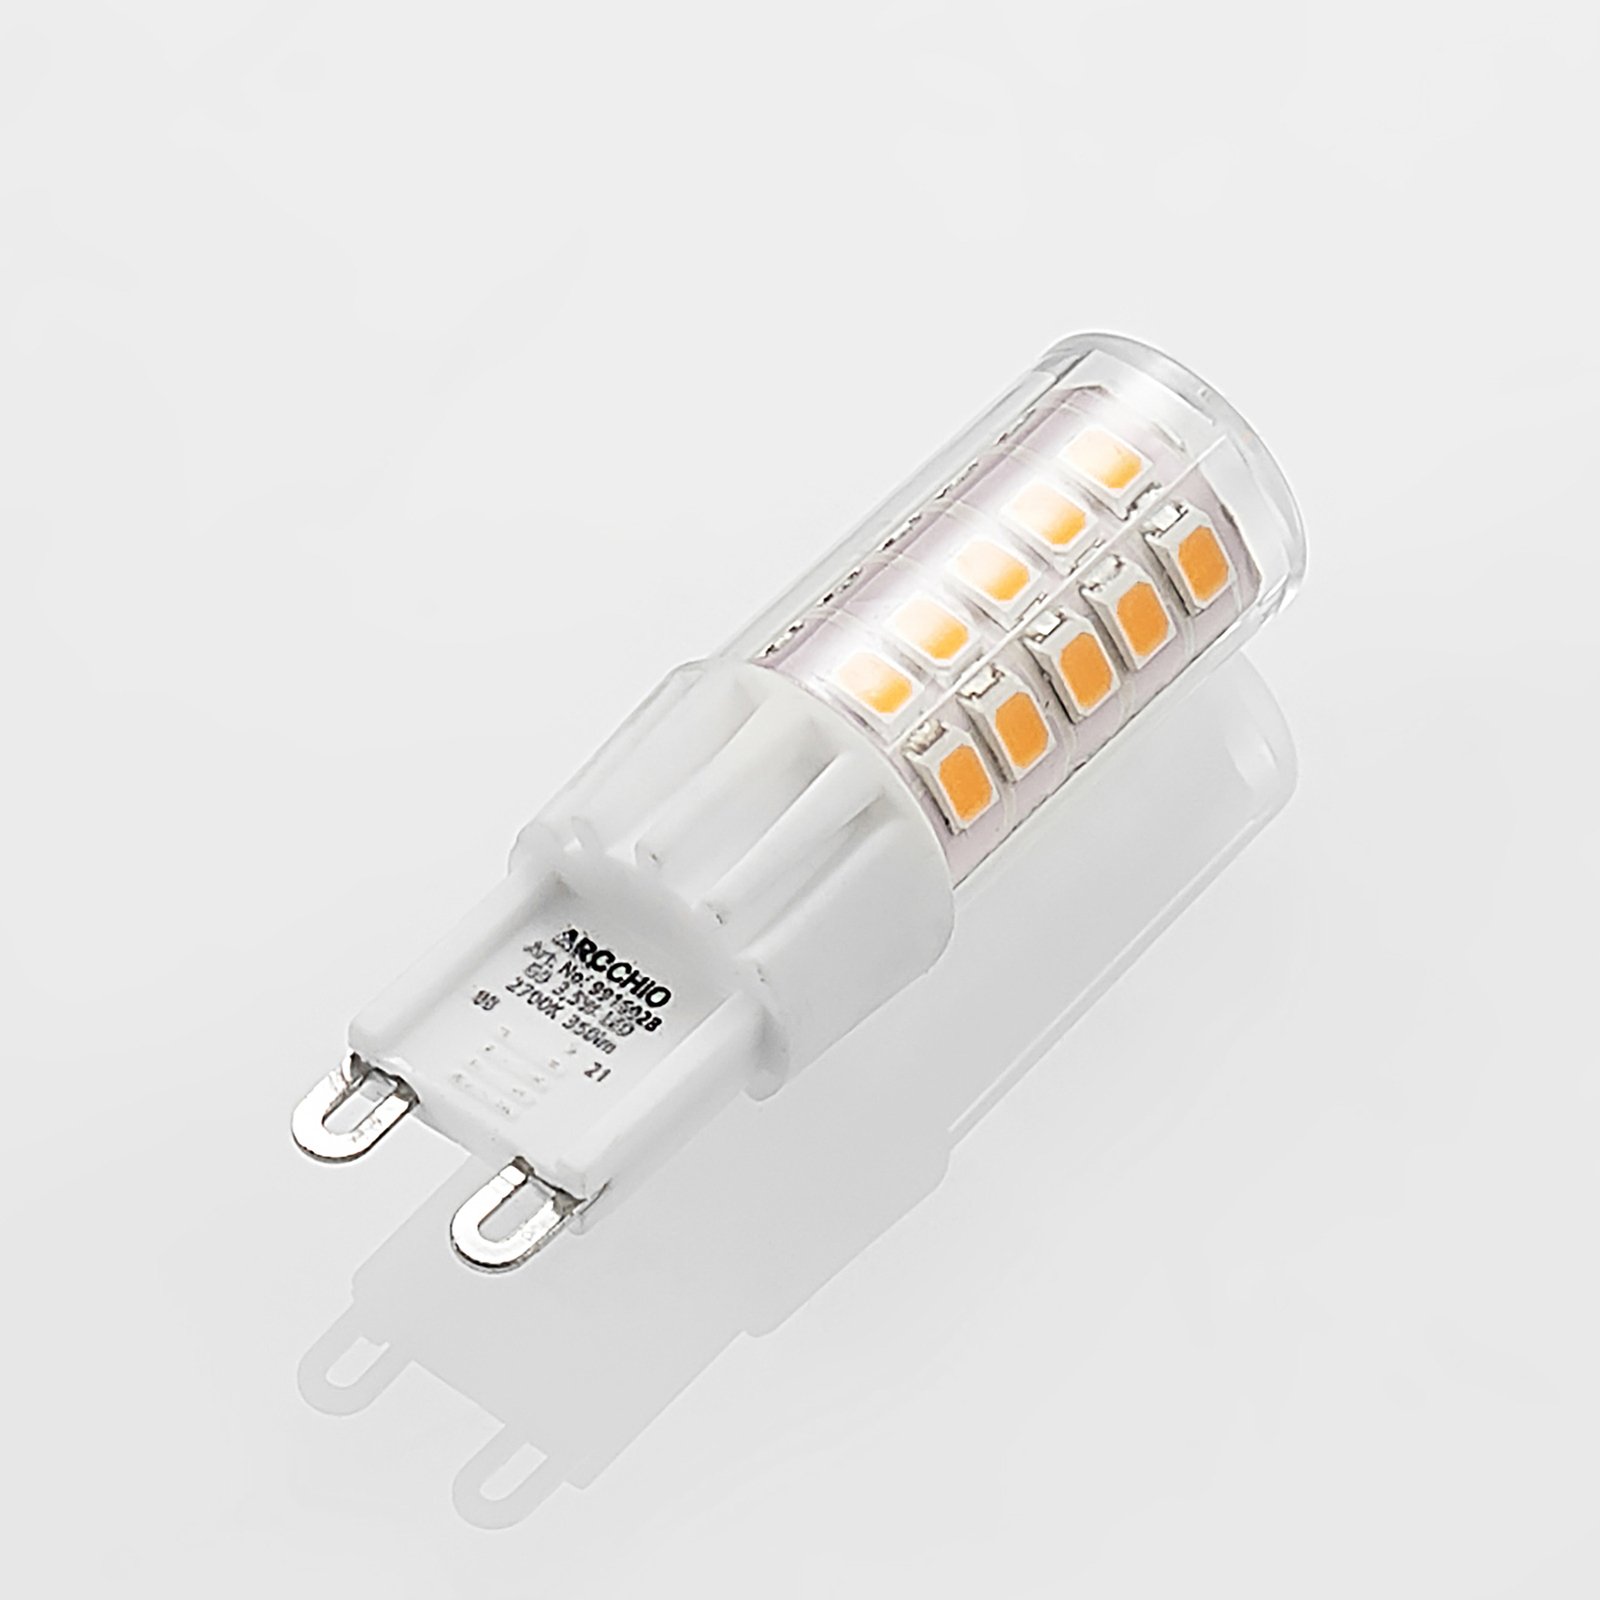 Arcchio LED stiftlamp G9 3,5W 827 6er-set